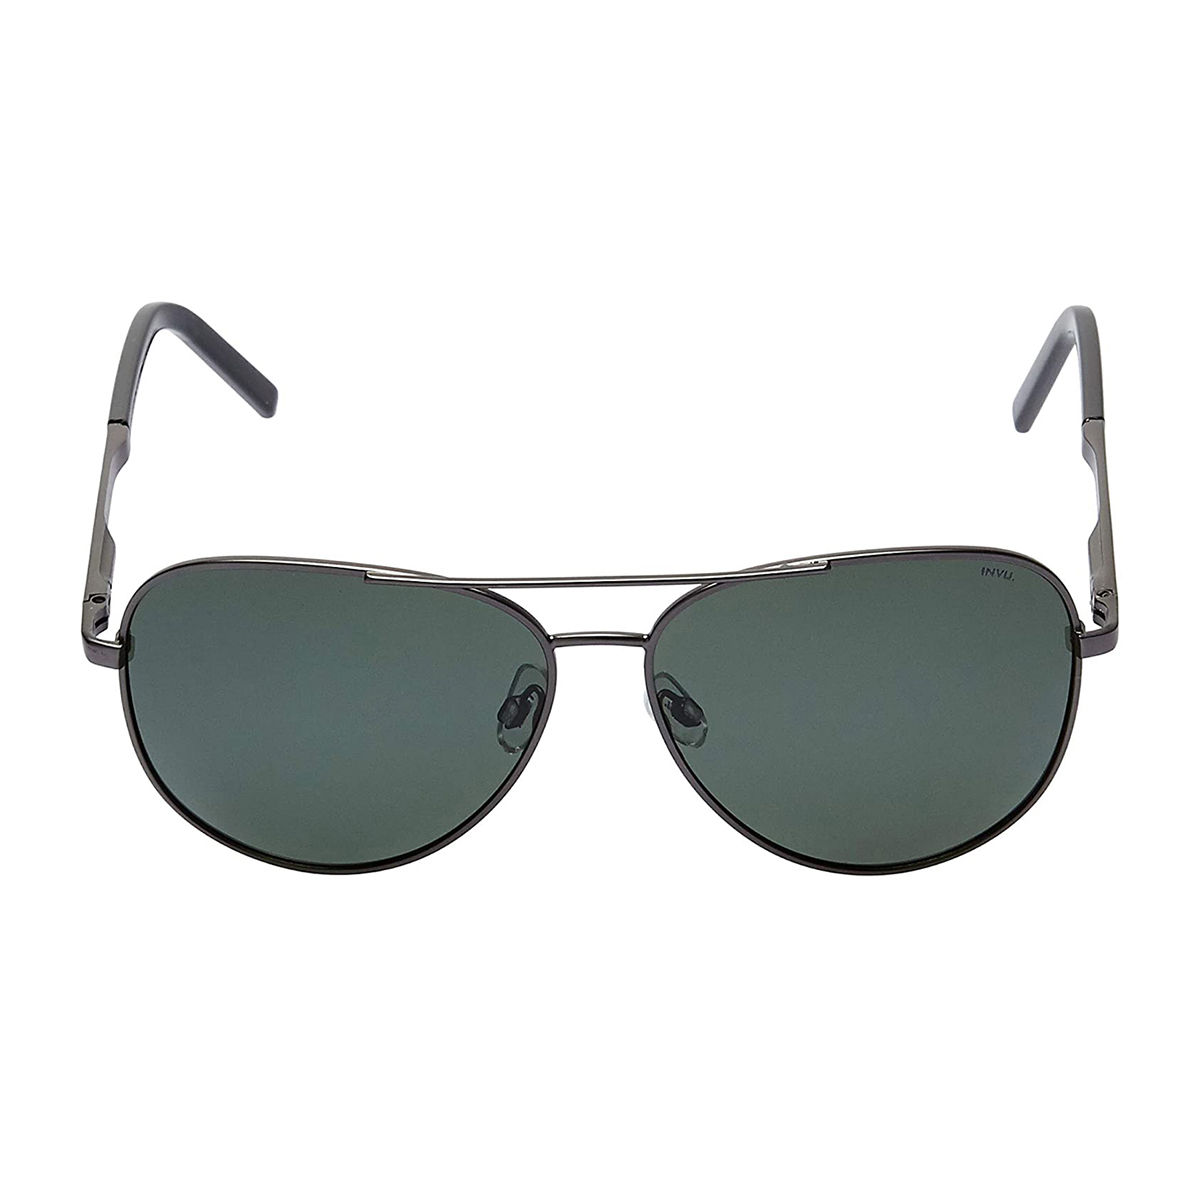 Invu Sunglasses Aviator With Green Lens For Men